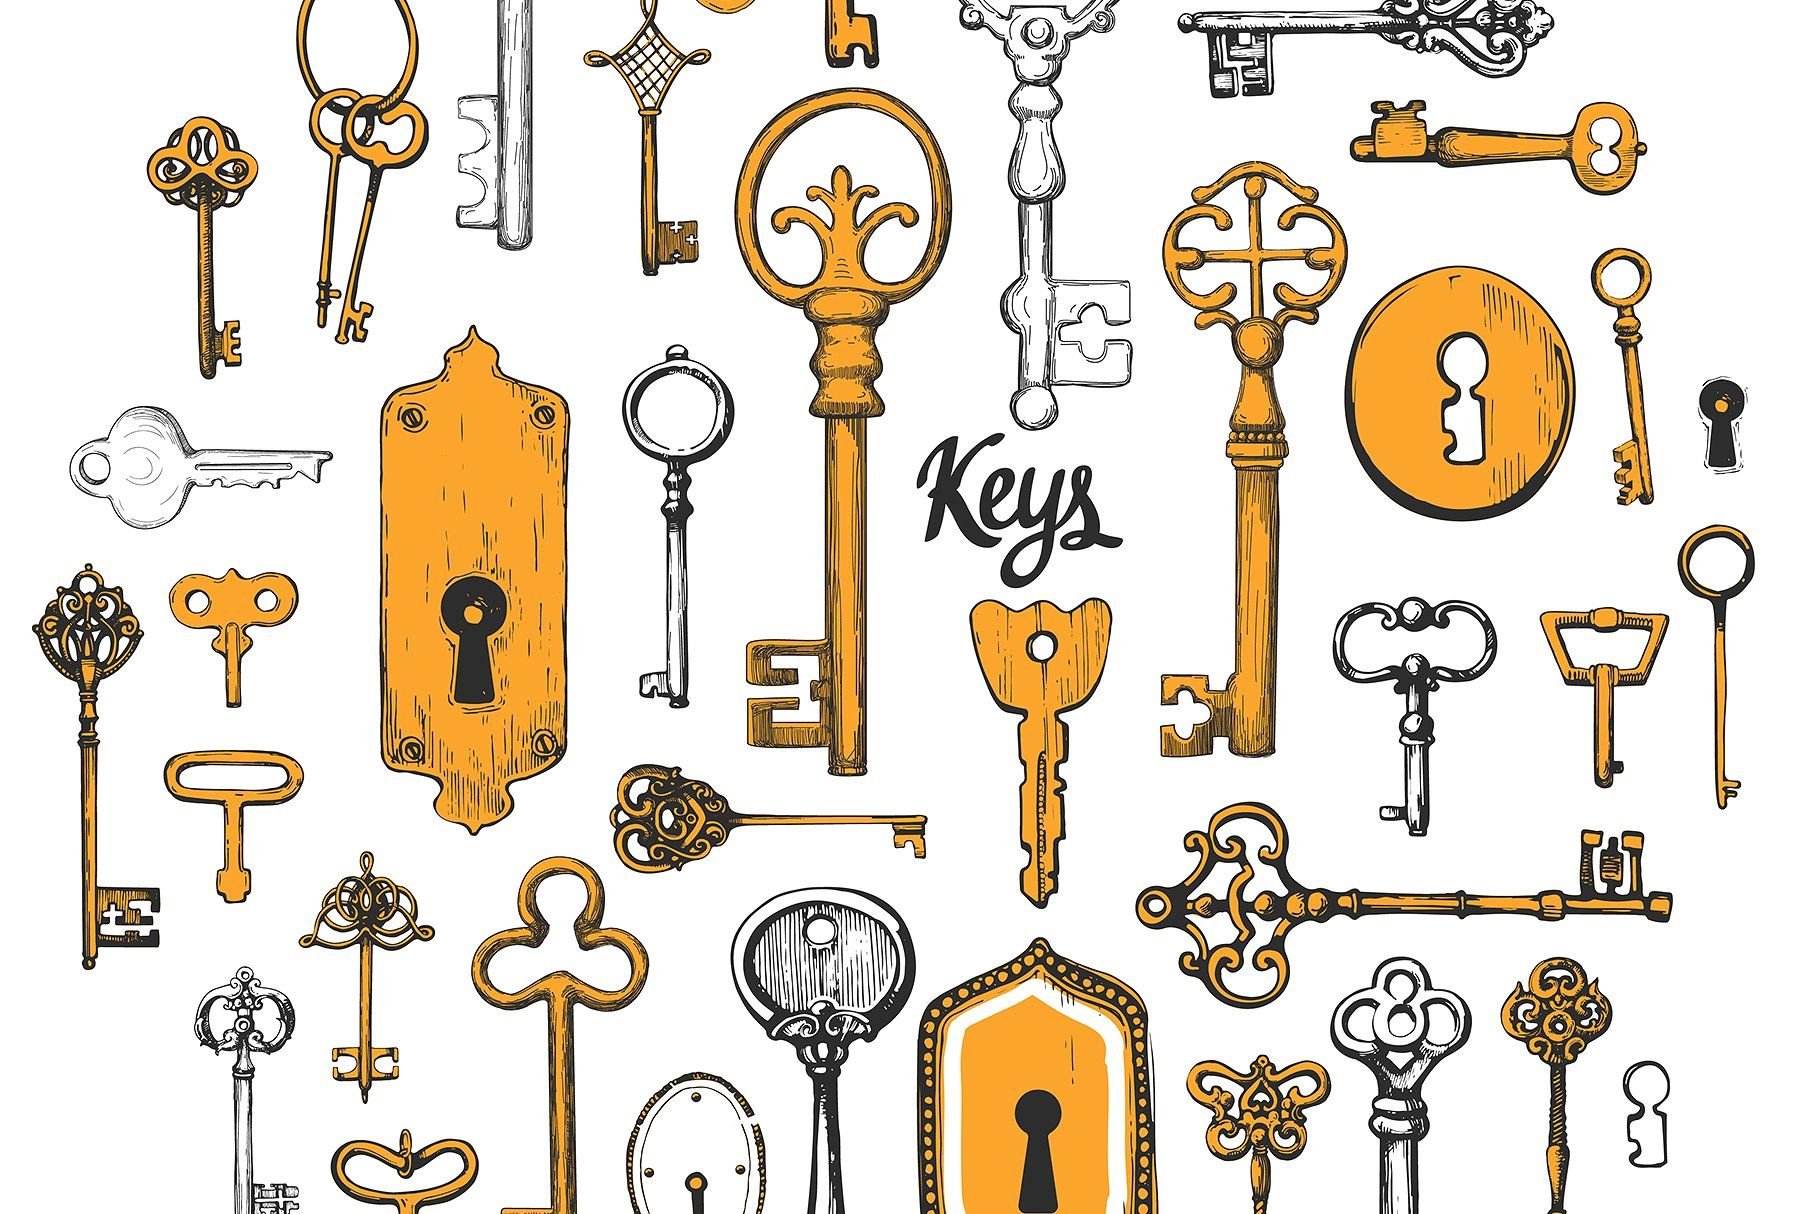 Keys picture. Ключ рисунок. Старинный ключ рисунок. Ключ рисовать. Нарисовать старинный ключ.